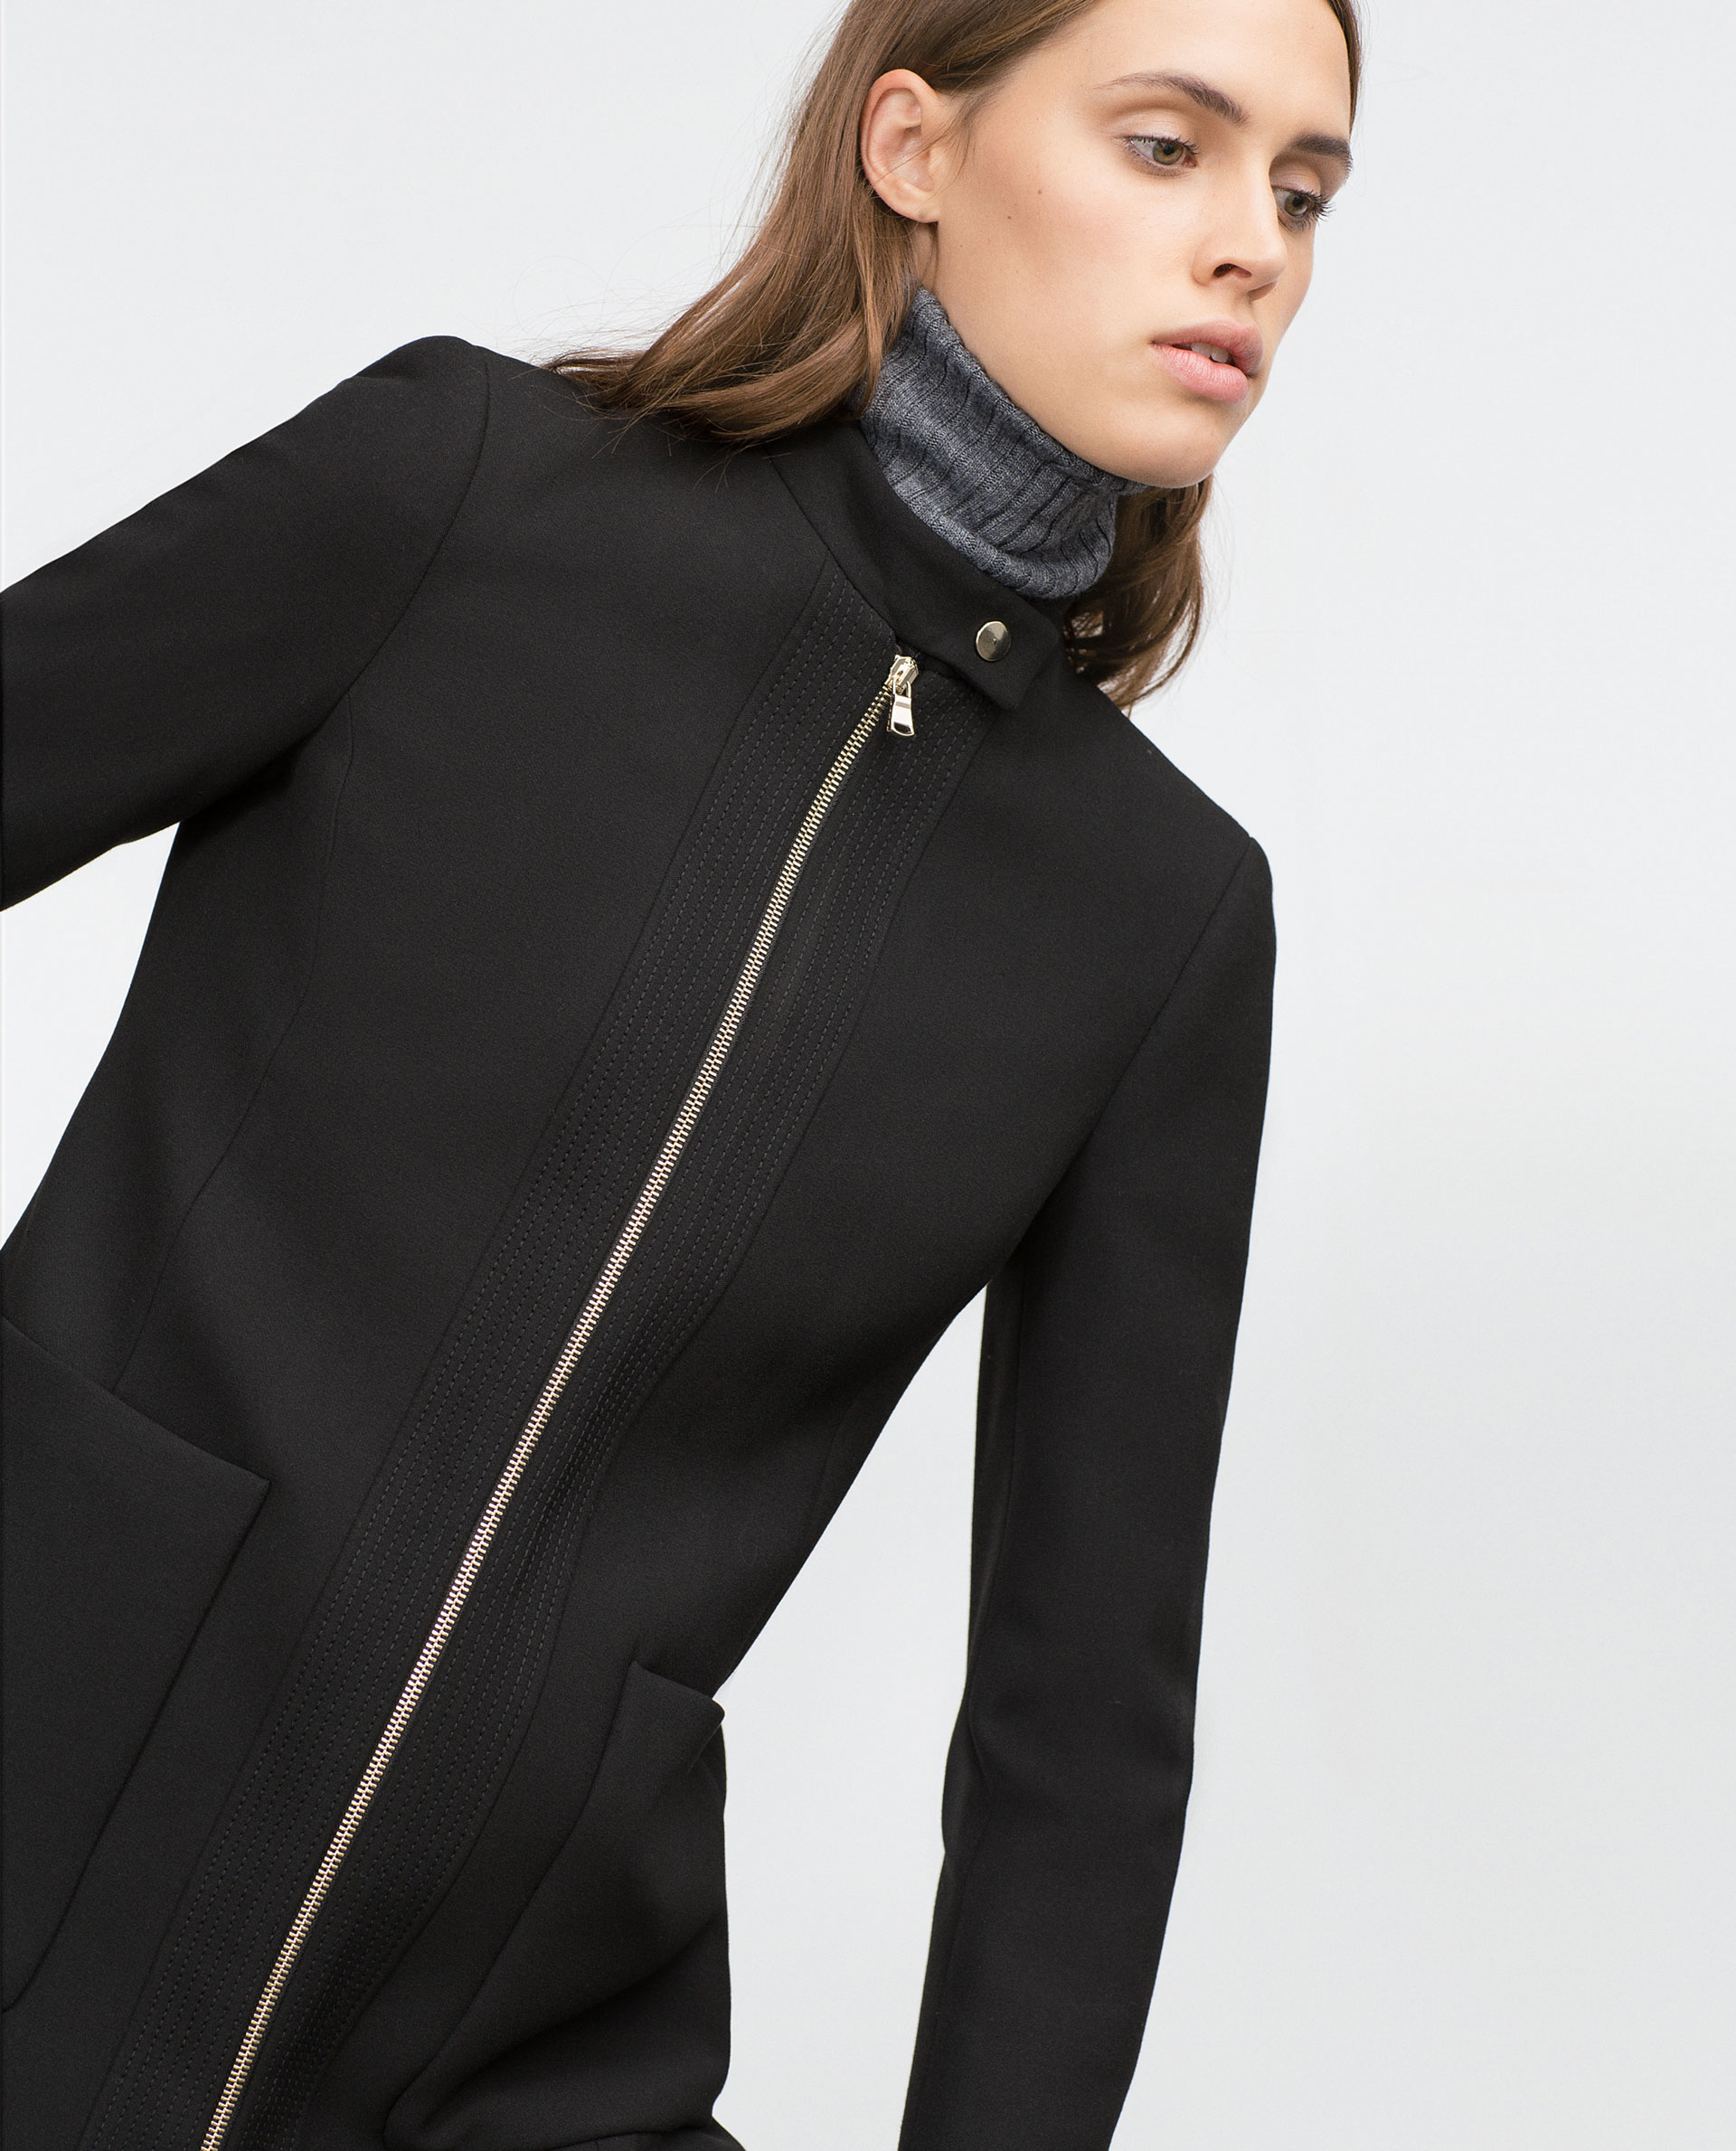 Zara Coat With Central Zip in Black | Lyst